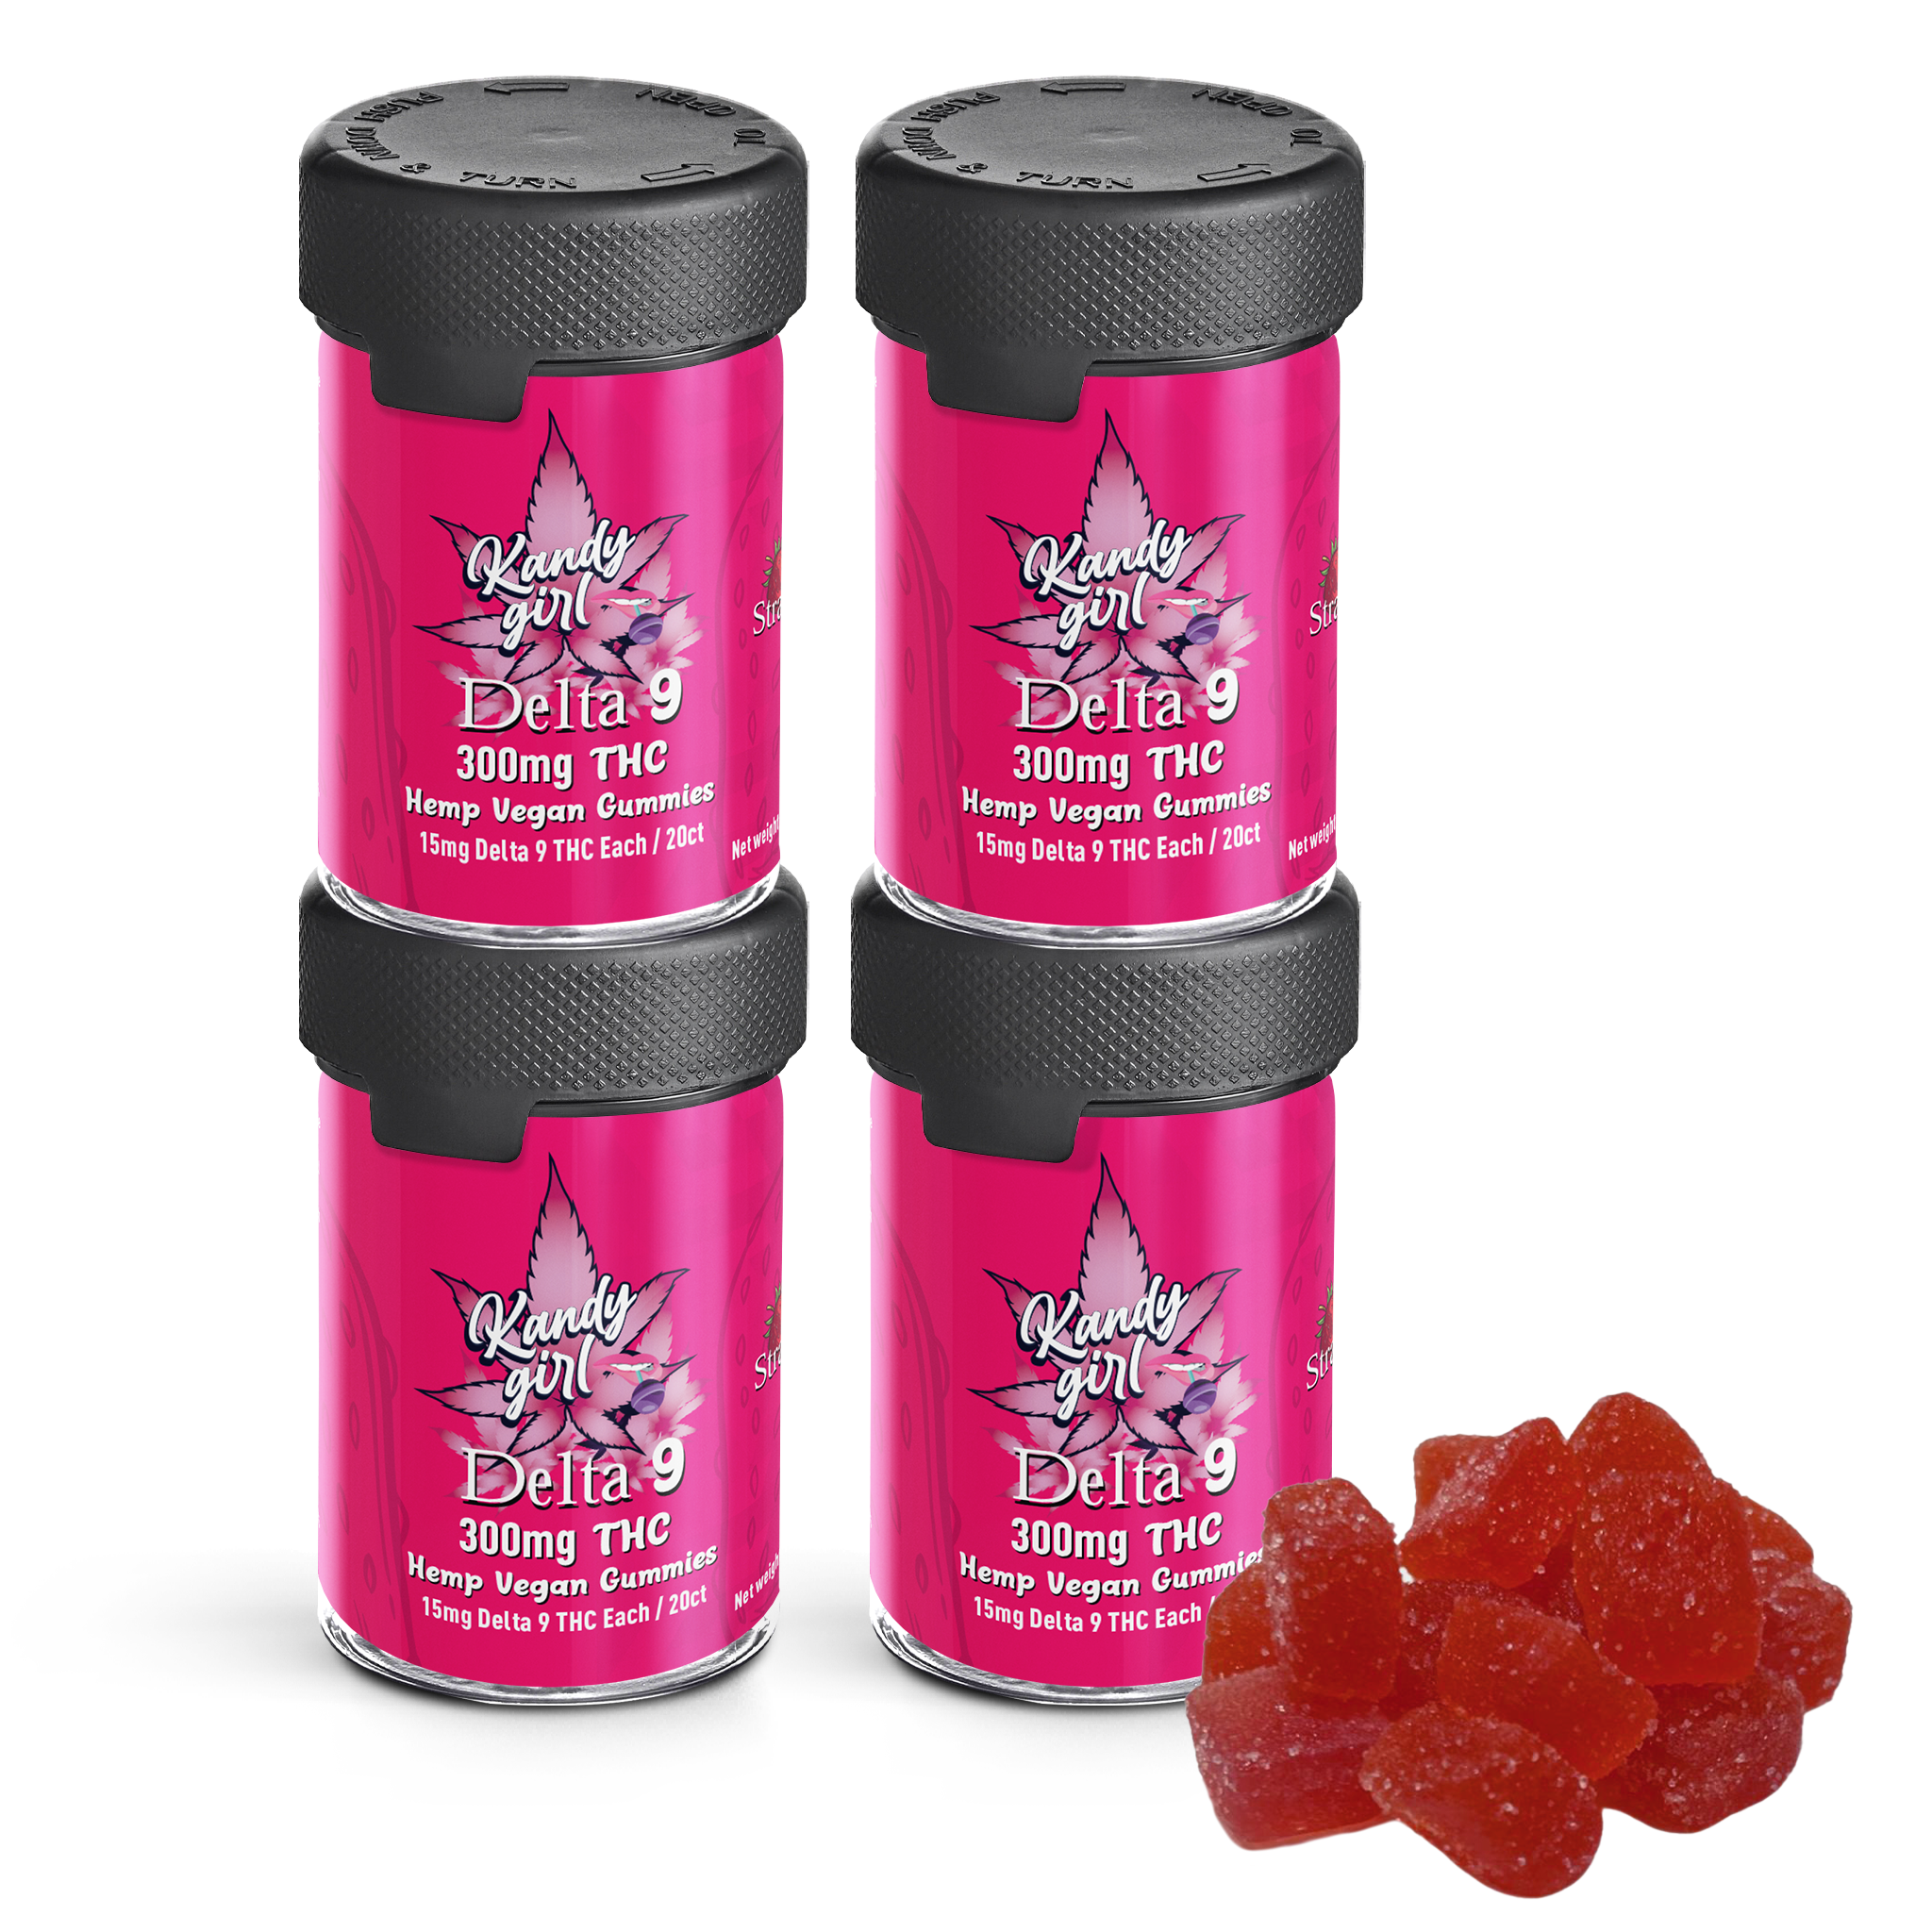 Delta 9 THC Gummies Strawberry Vegan - Four Bottle Bundle (1200mg THC Total)